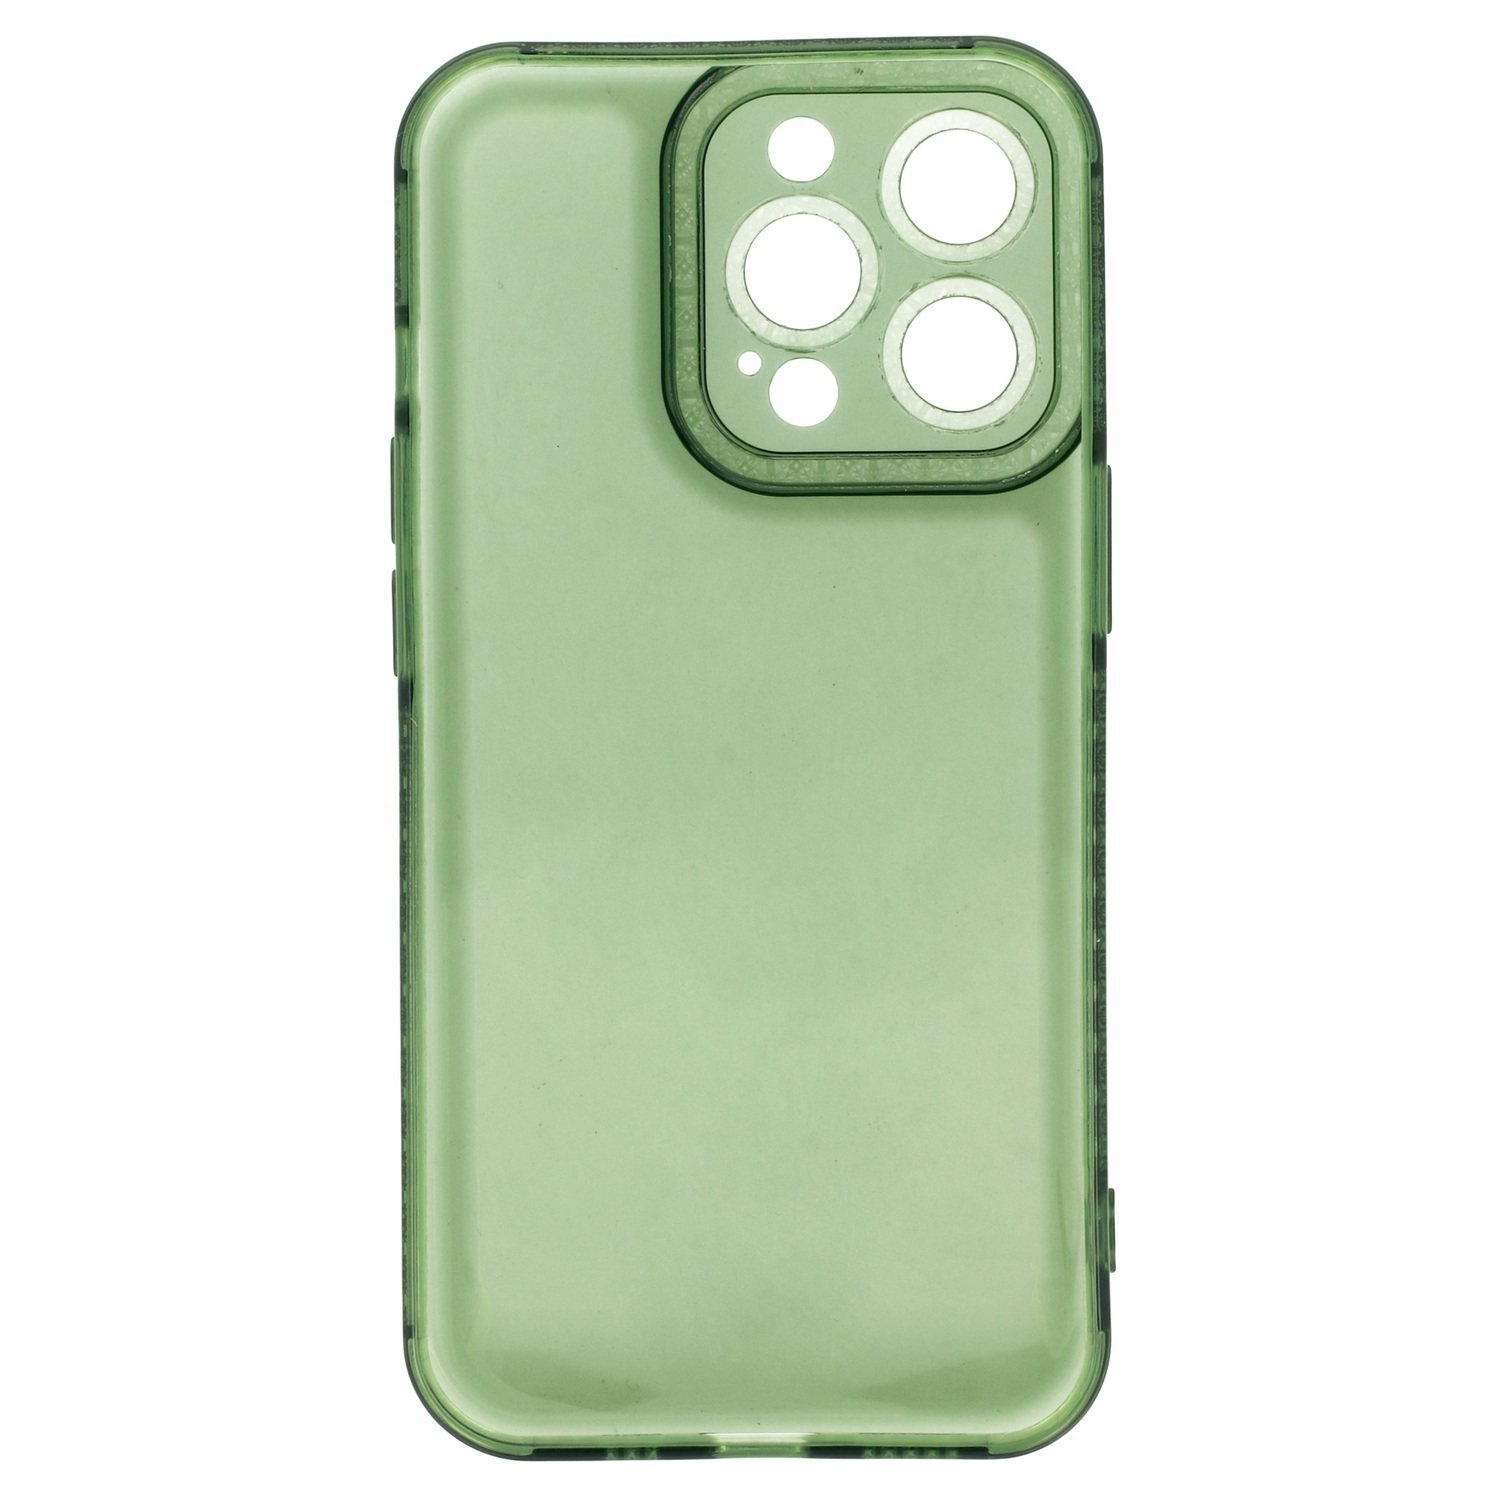 Pokrowiec etui silikonowe Crystal Diamond Case zielone APPLE iPhone SE 2020 / 5